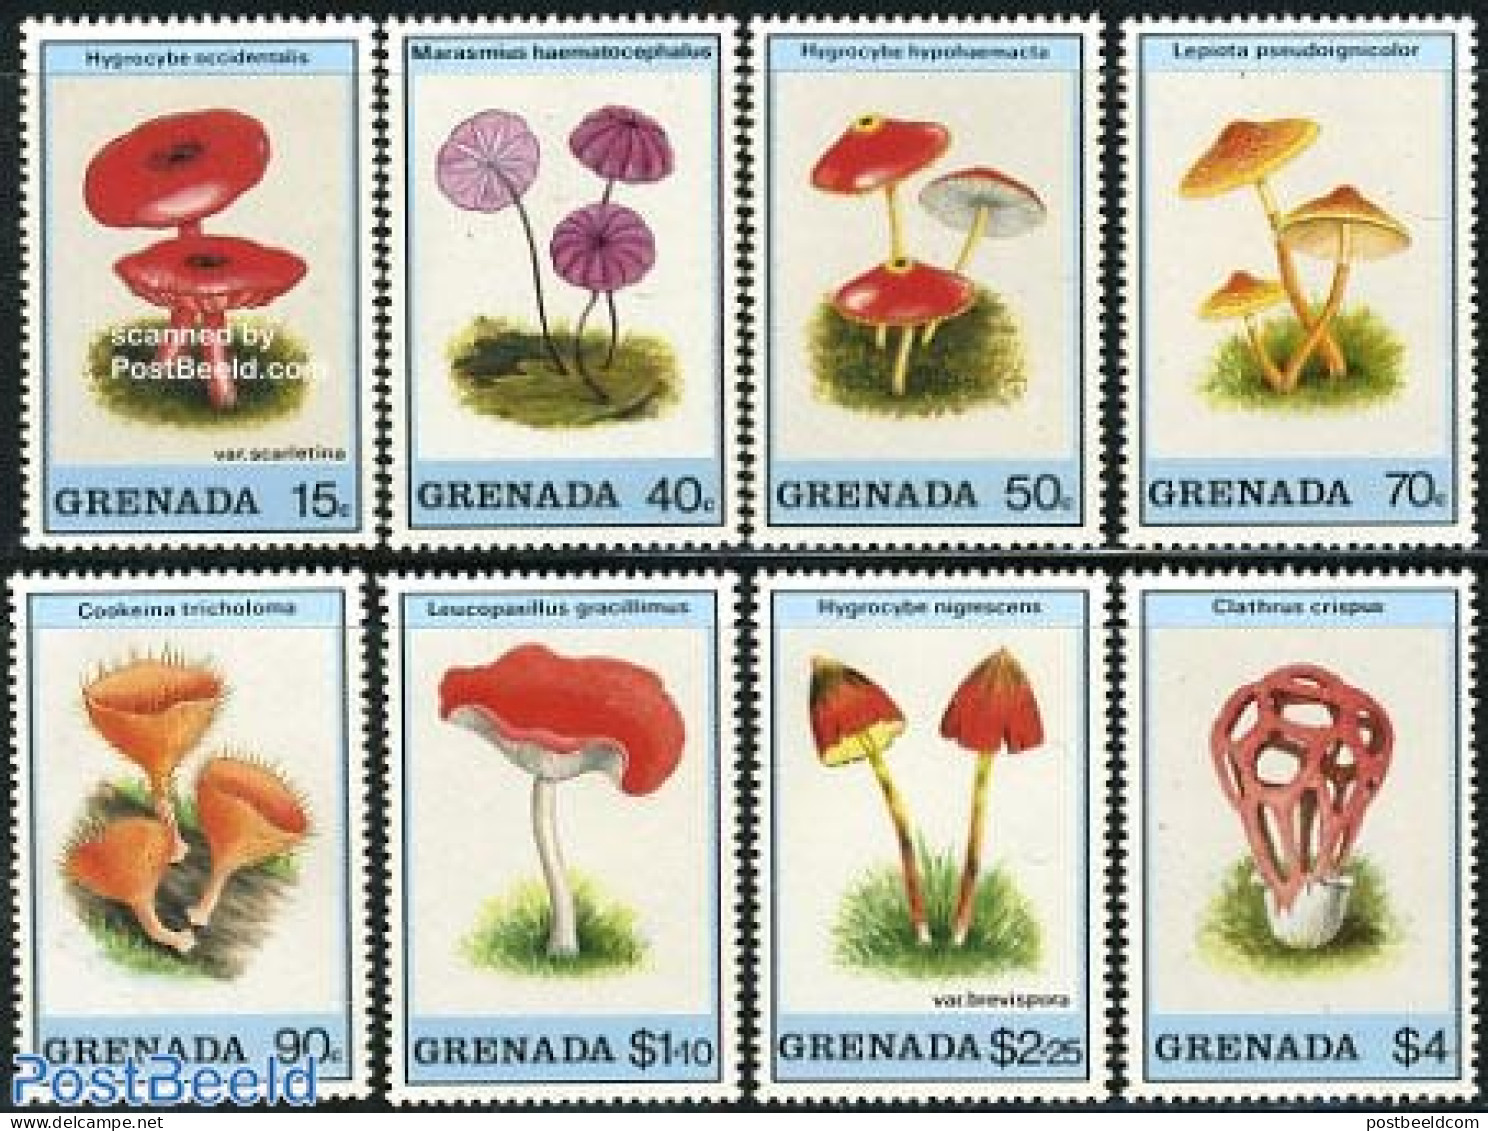 Grenada 1989 Mushrooms 8v, Mint NH, Nature - Mushrooms - Funghi